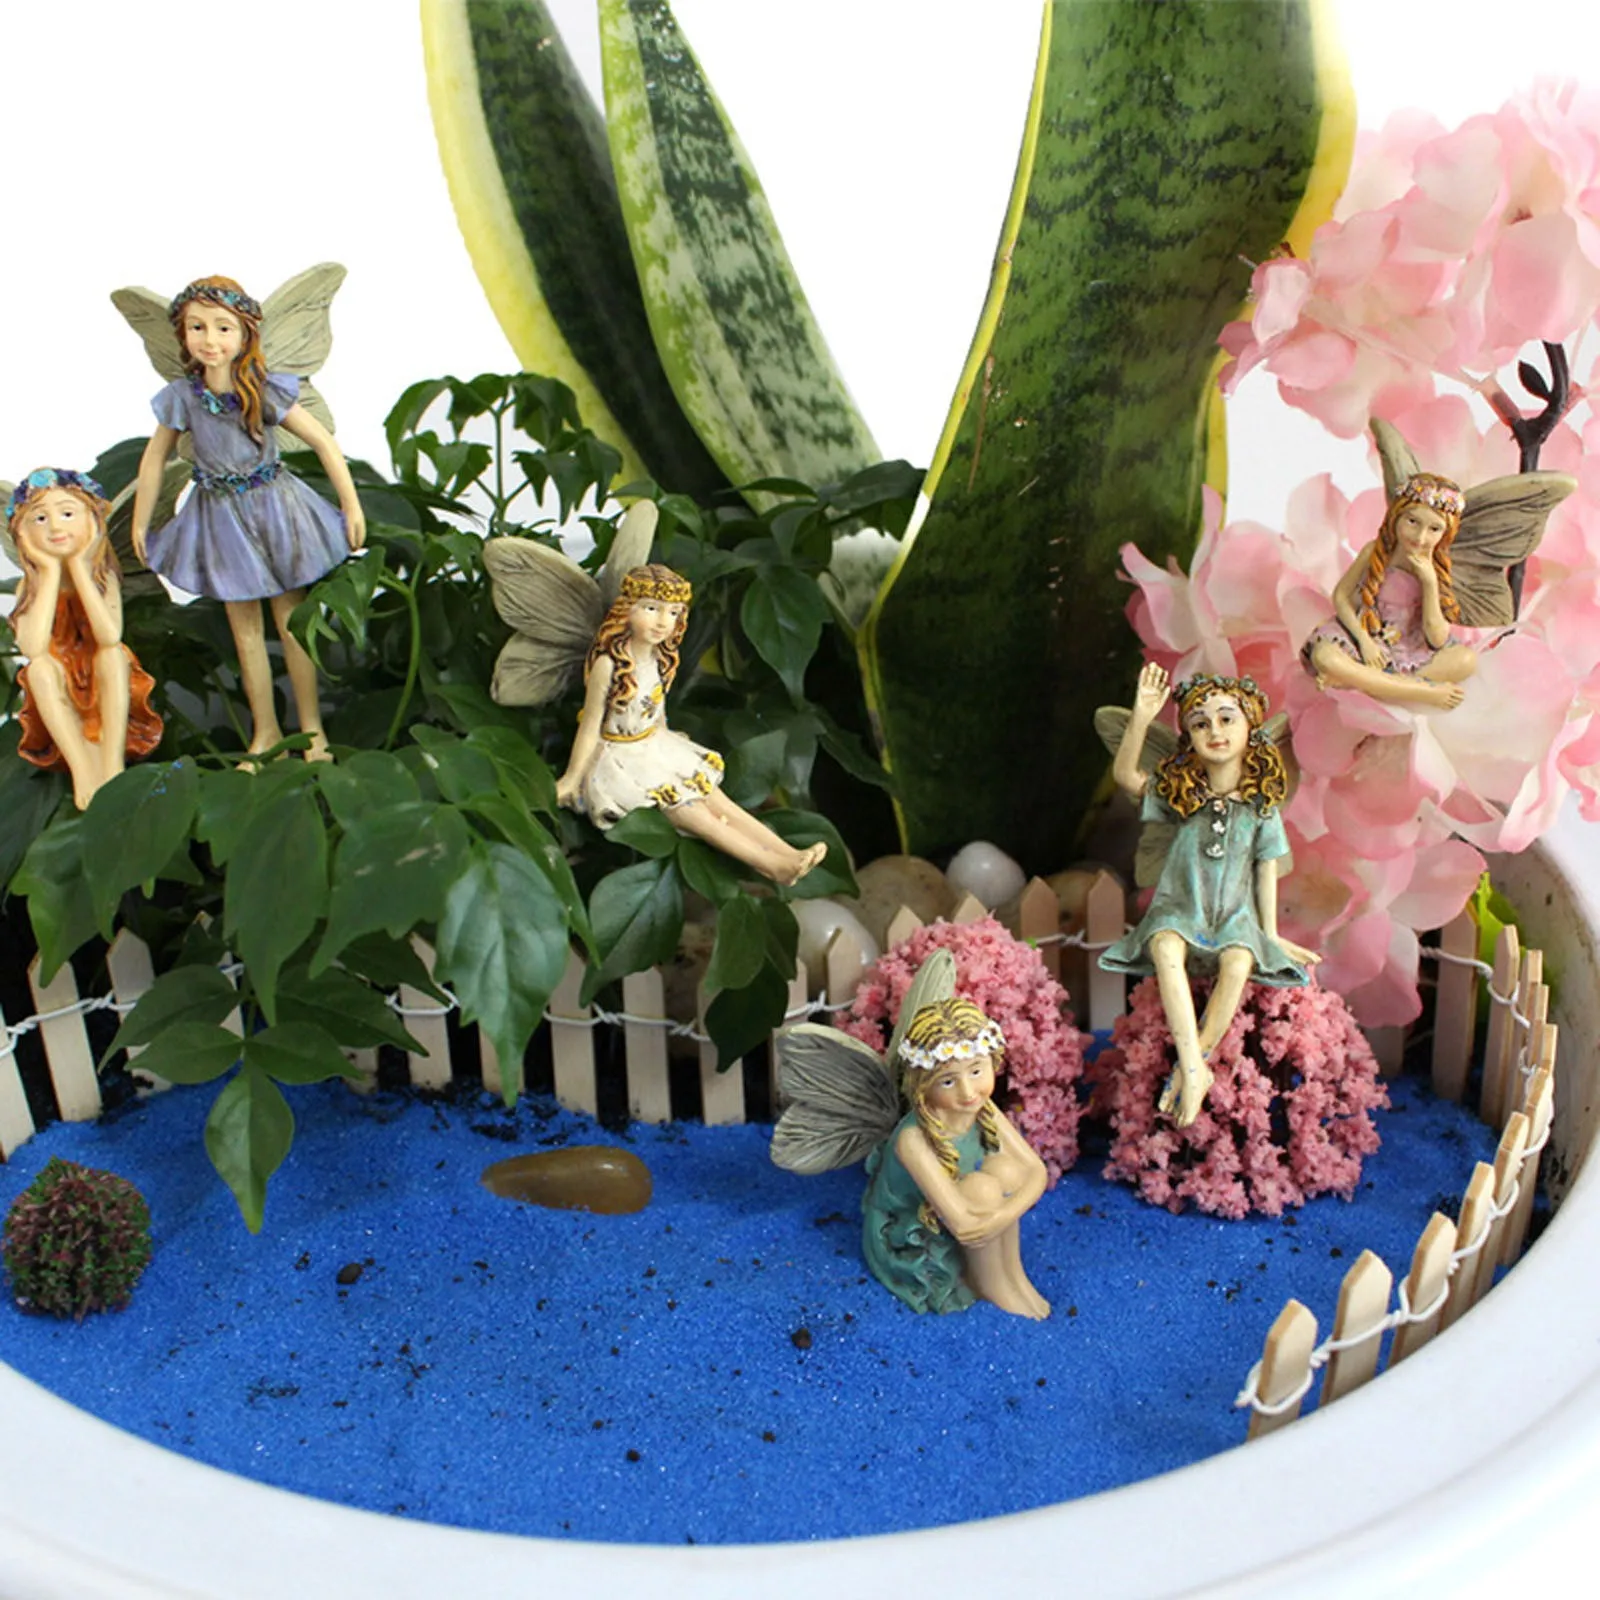 6pcs Resin Garden Fairies Stakes Set Miniature Statues For Outdoor Garden Pot Bonsai Decor Art Sculpture Figurines For Garden